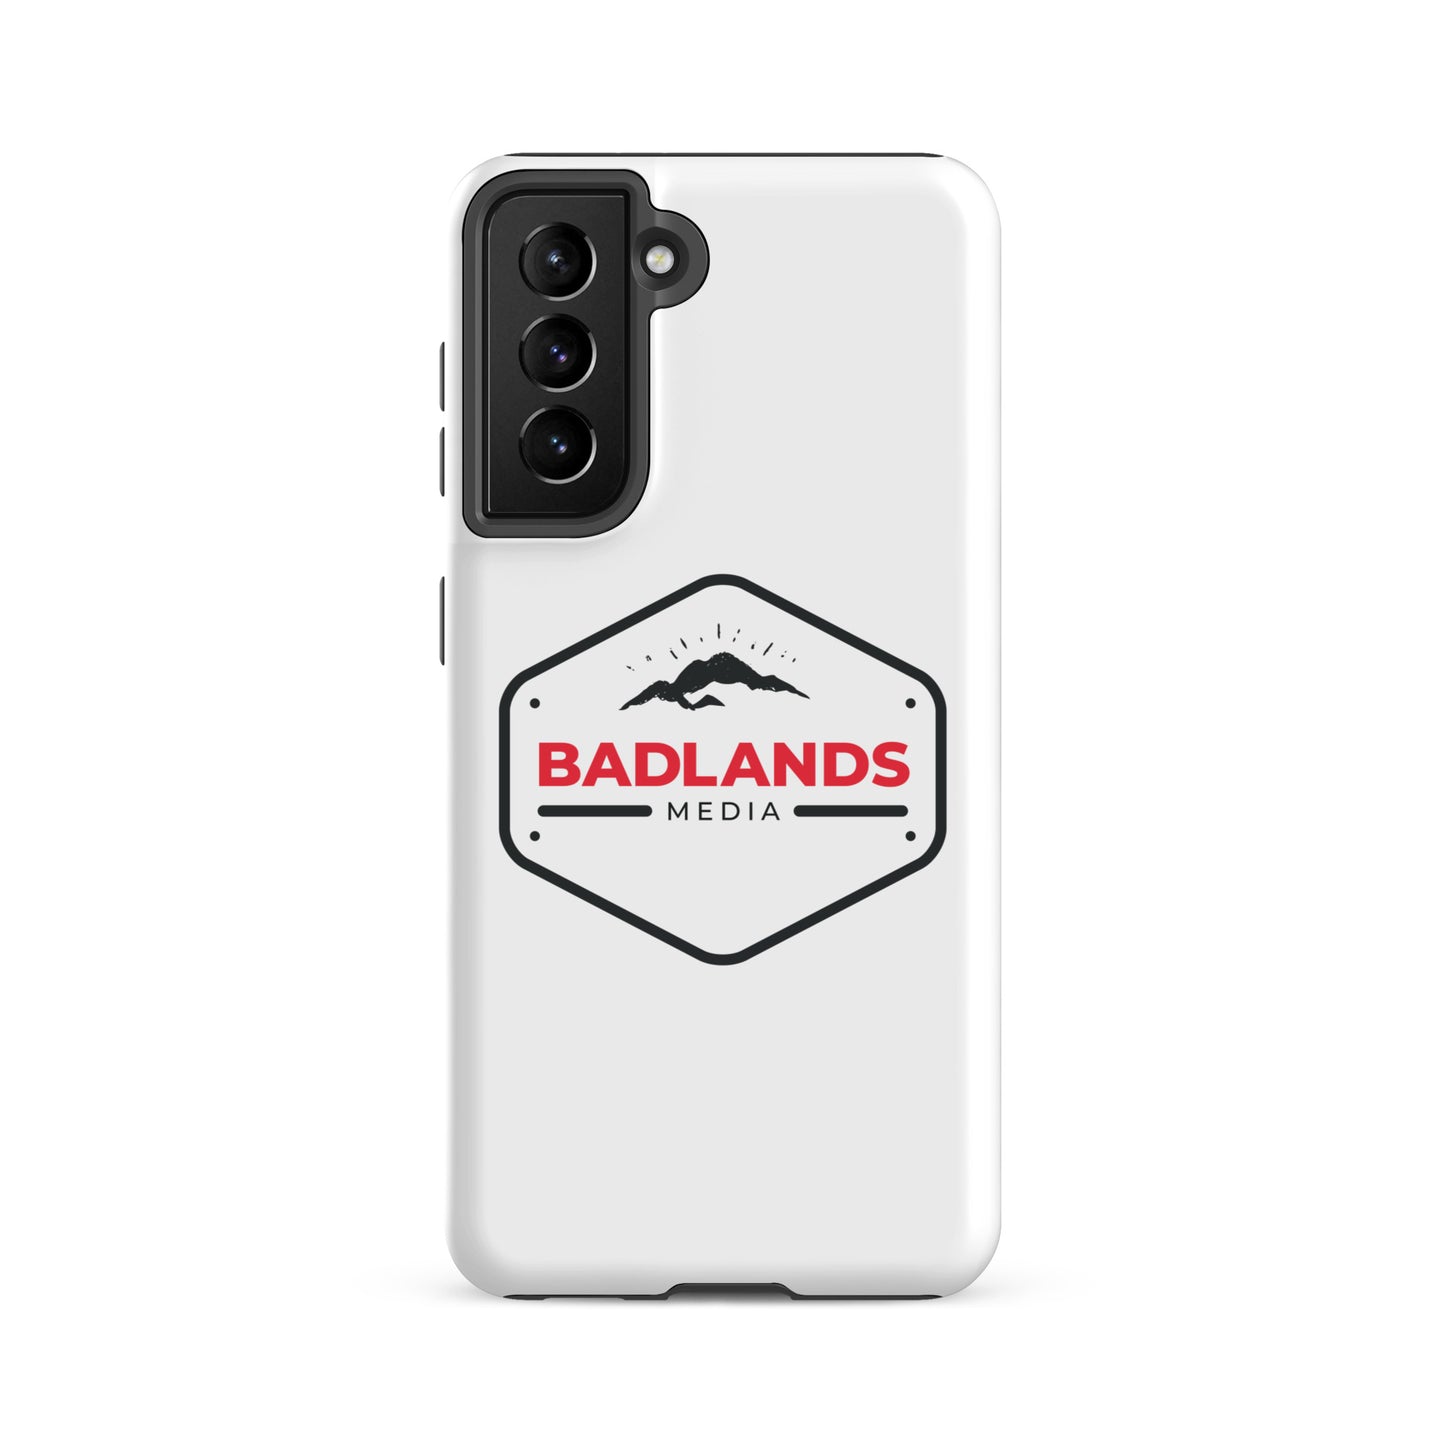 Badlands Tough case for Samsung® in white